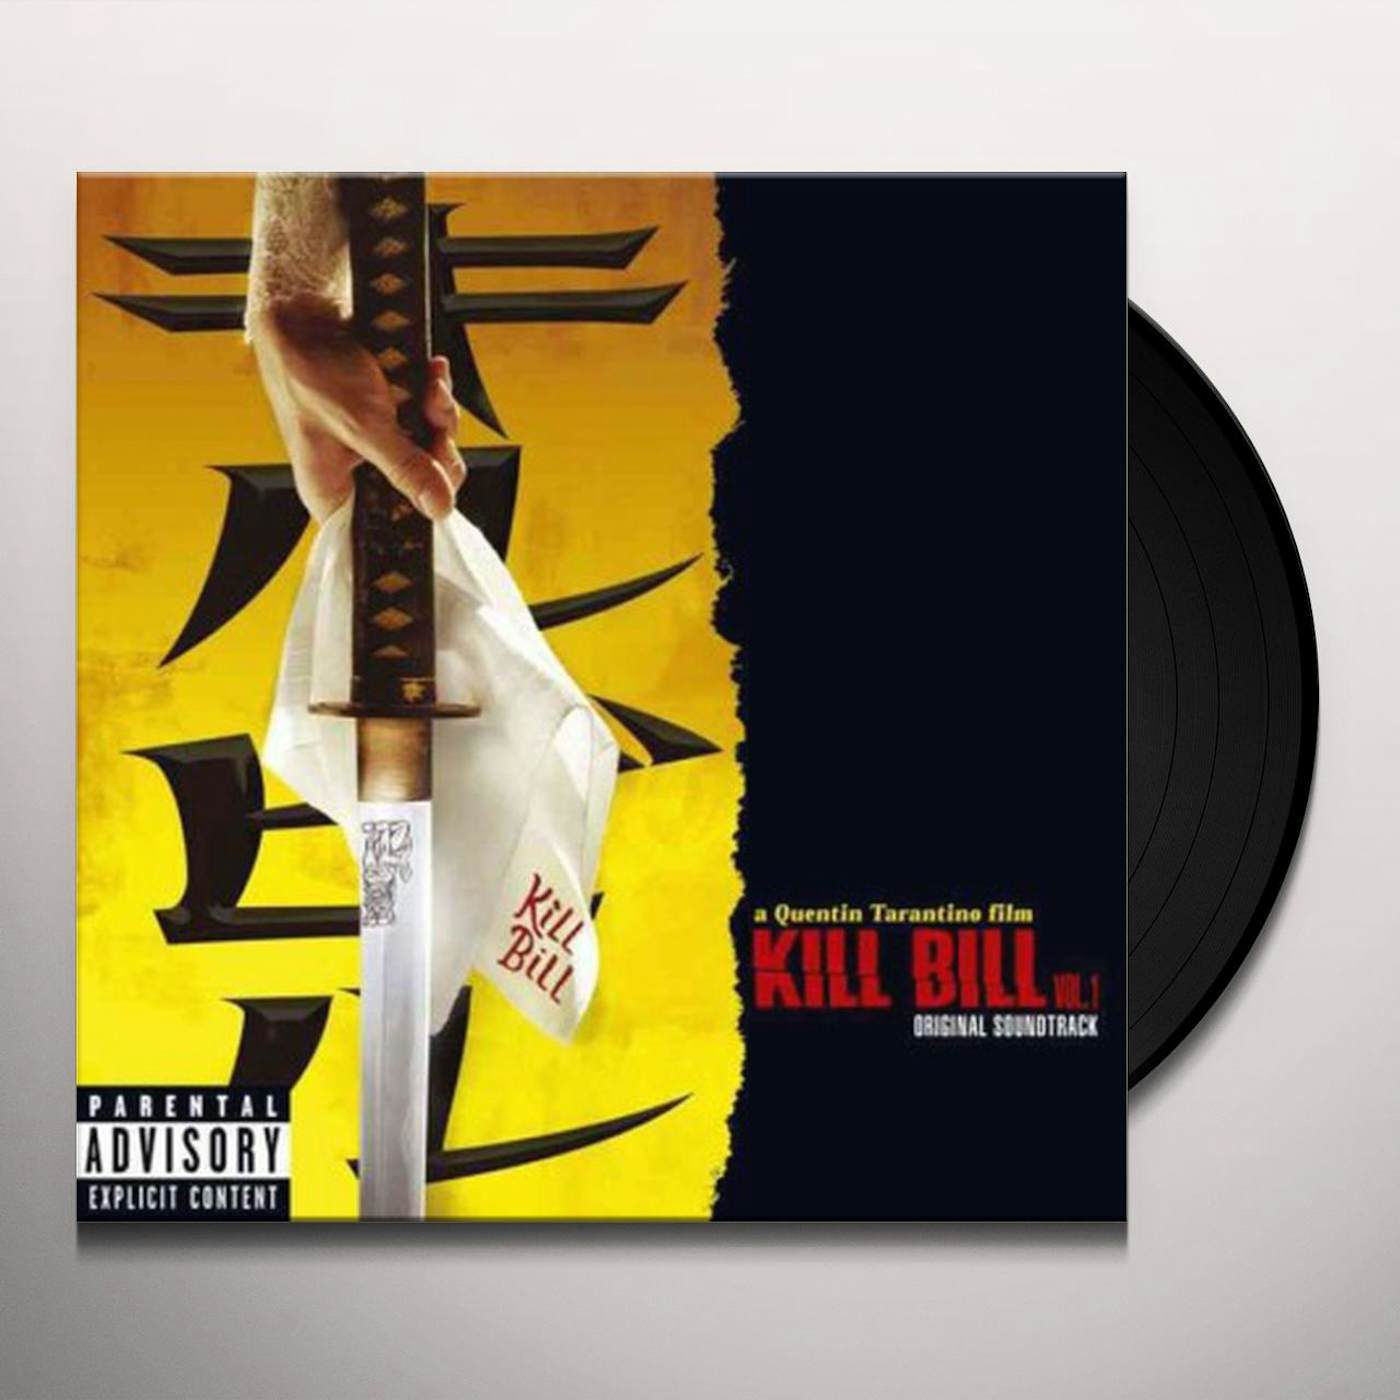 KILL BILL 1 / Original Soundtrack Vinyl Record